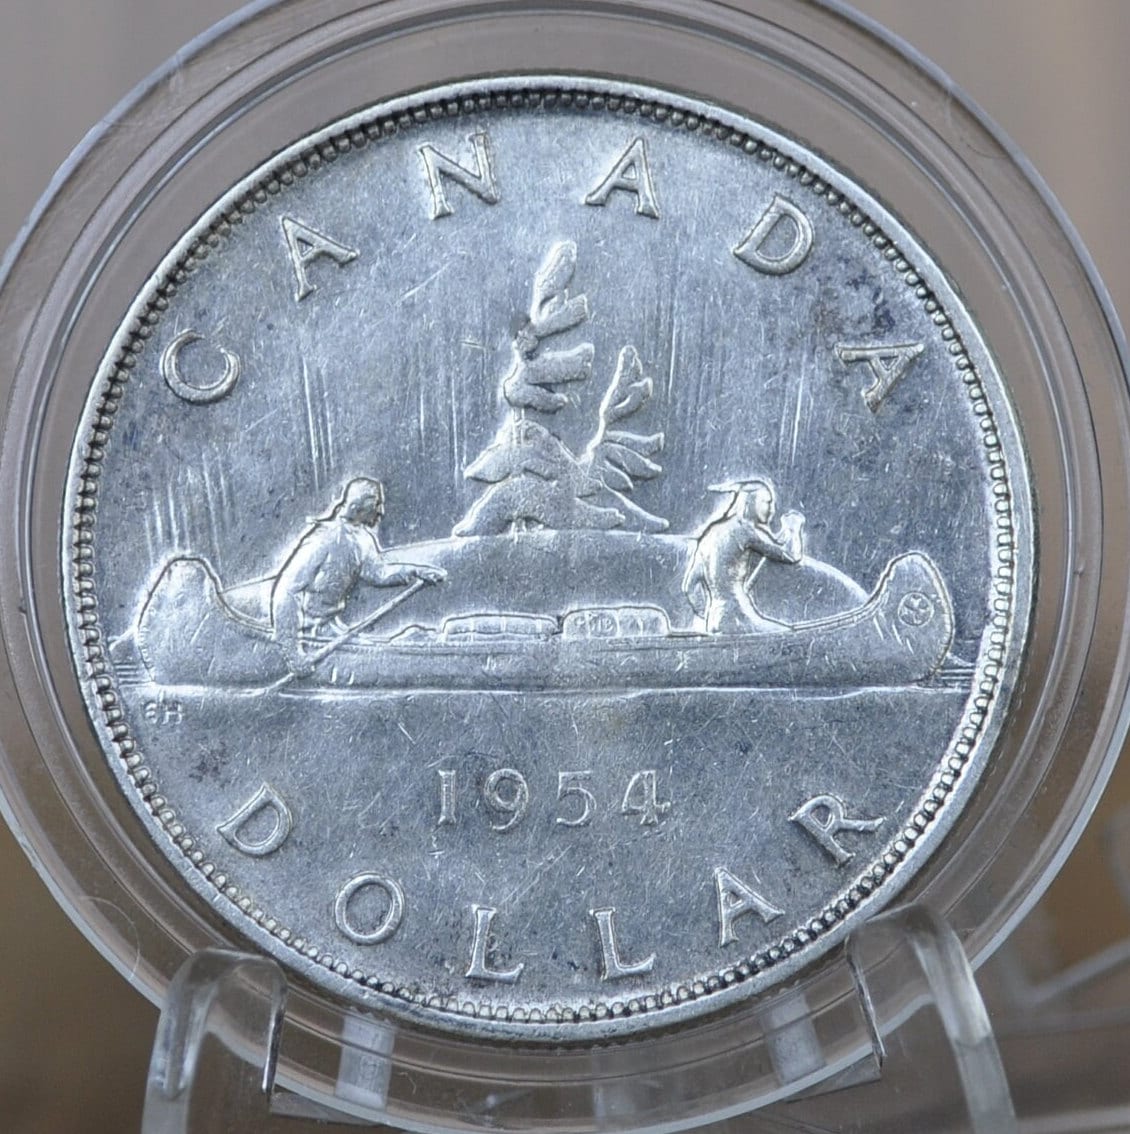 1954 Canadian Silver Dollar - Canoe Silver Dollar - 80% Silver - Silver Dollar Canada 1954 - Canadian Coin Collection